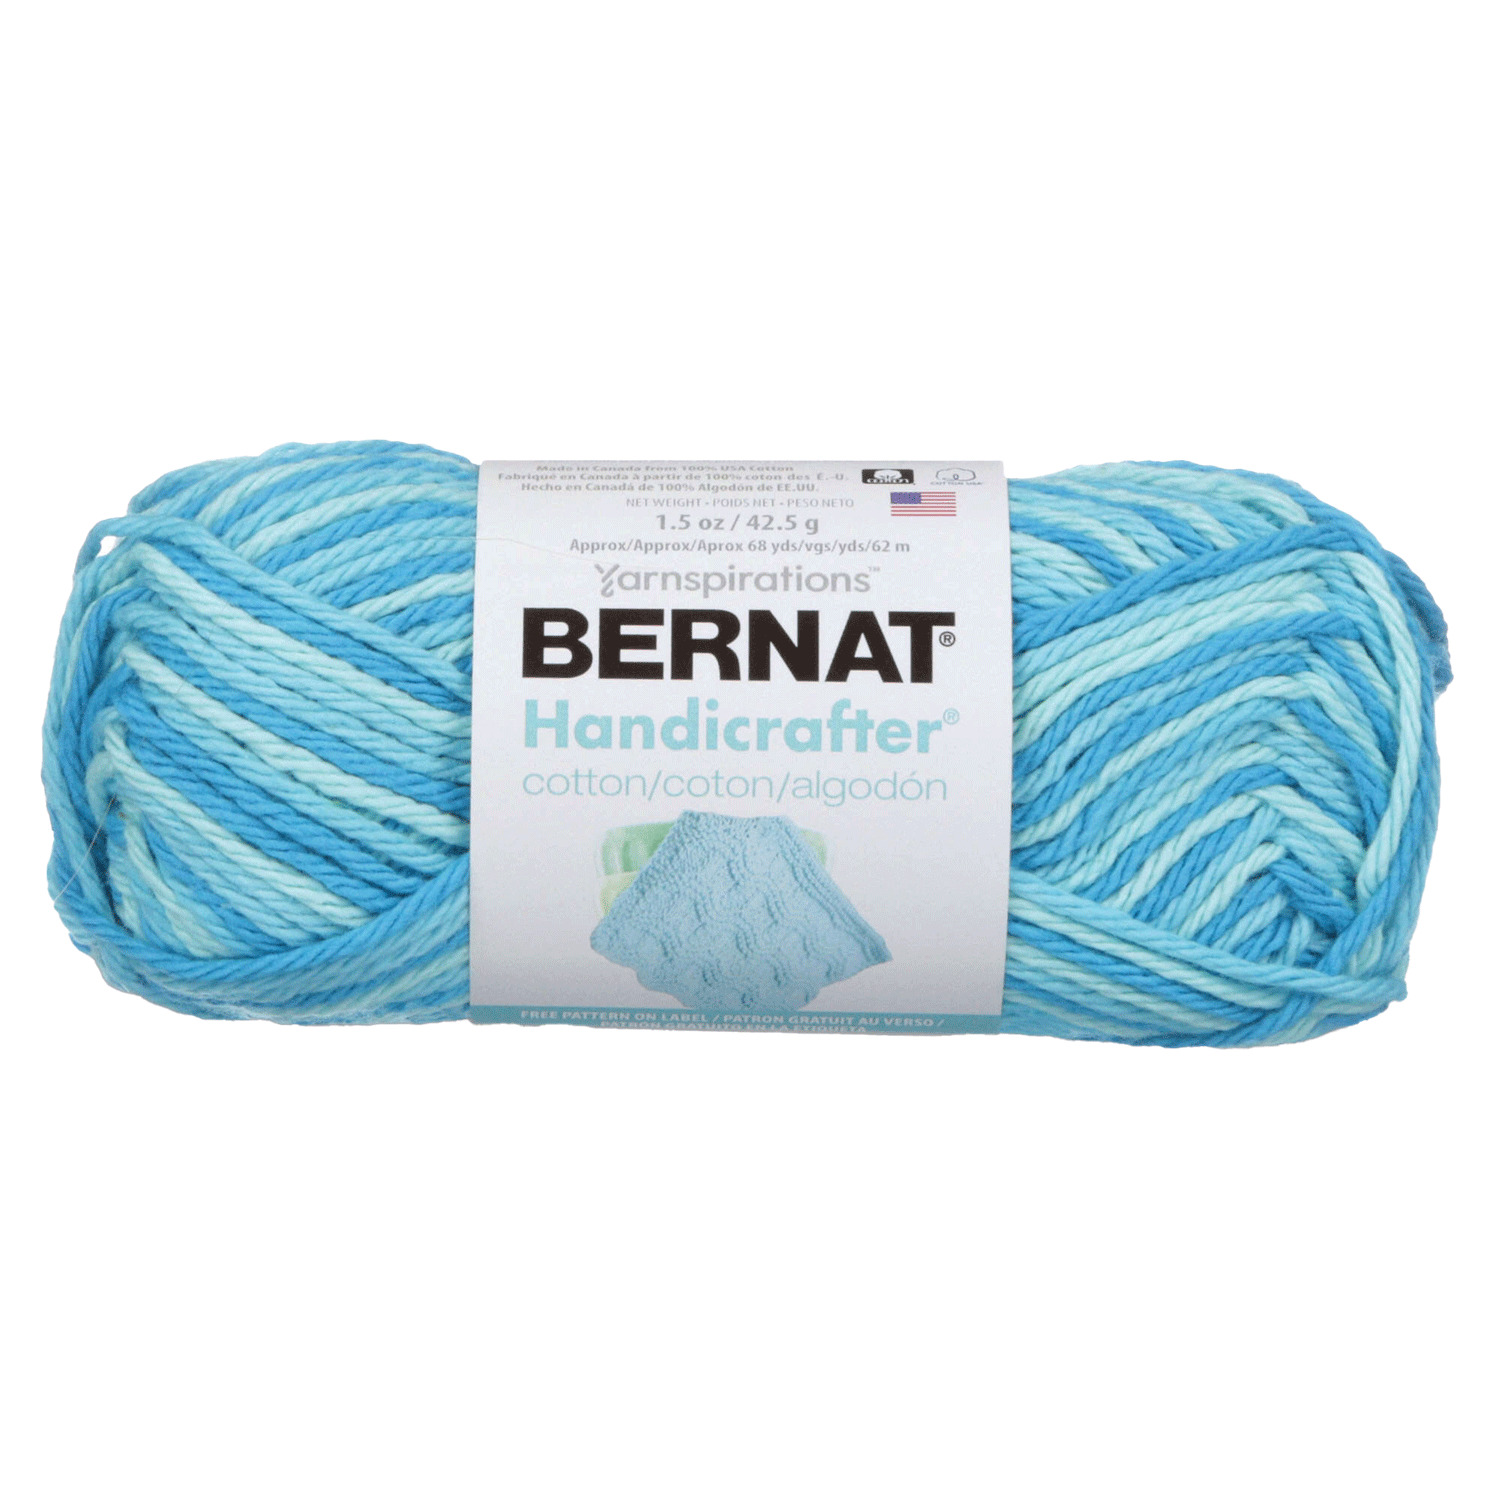 Bernat Handicrafter - Cotton yarn, Swimming pool